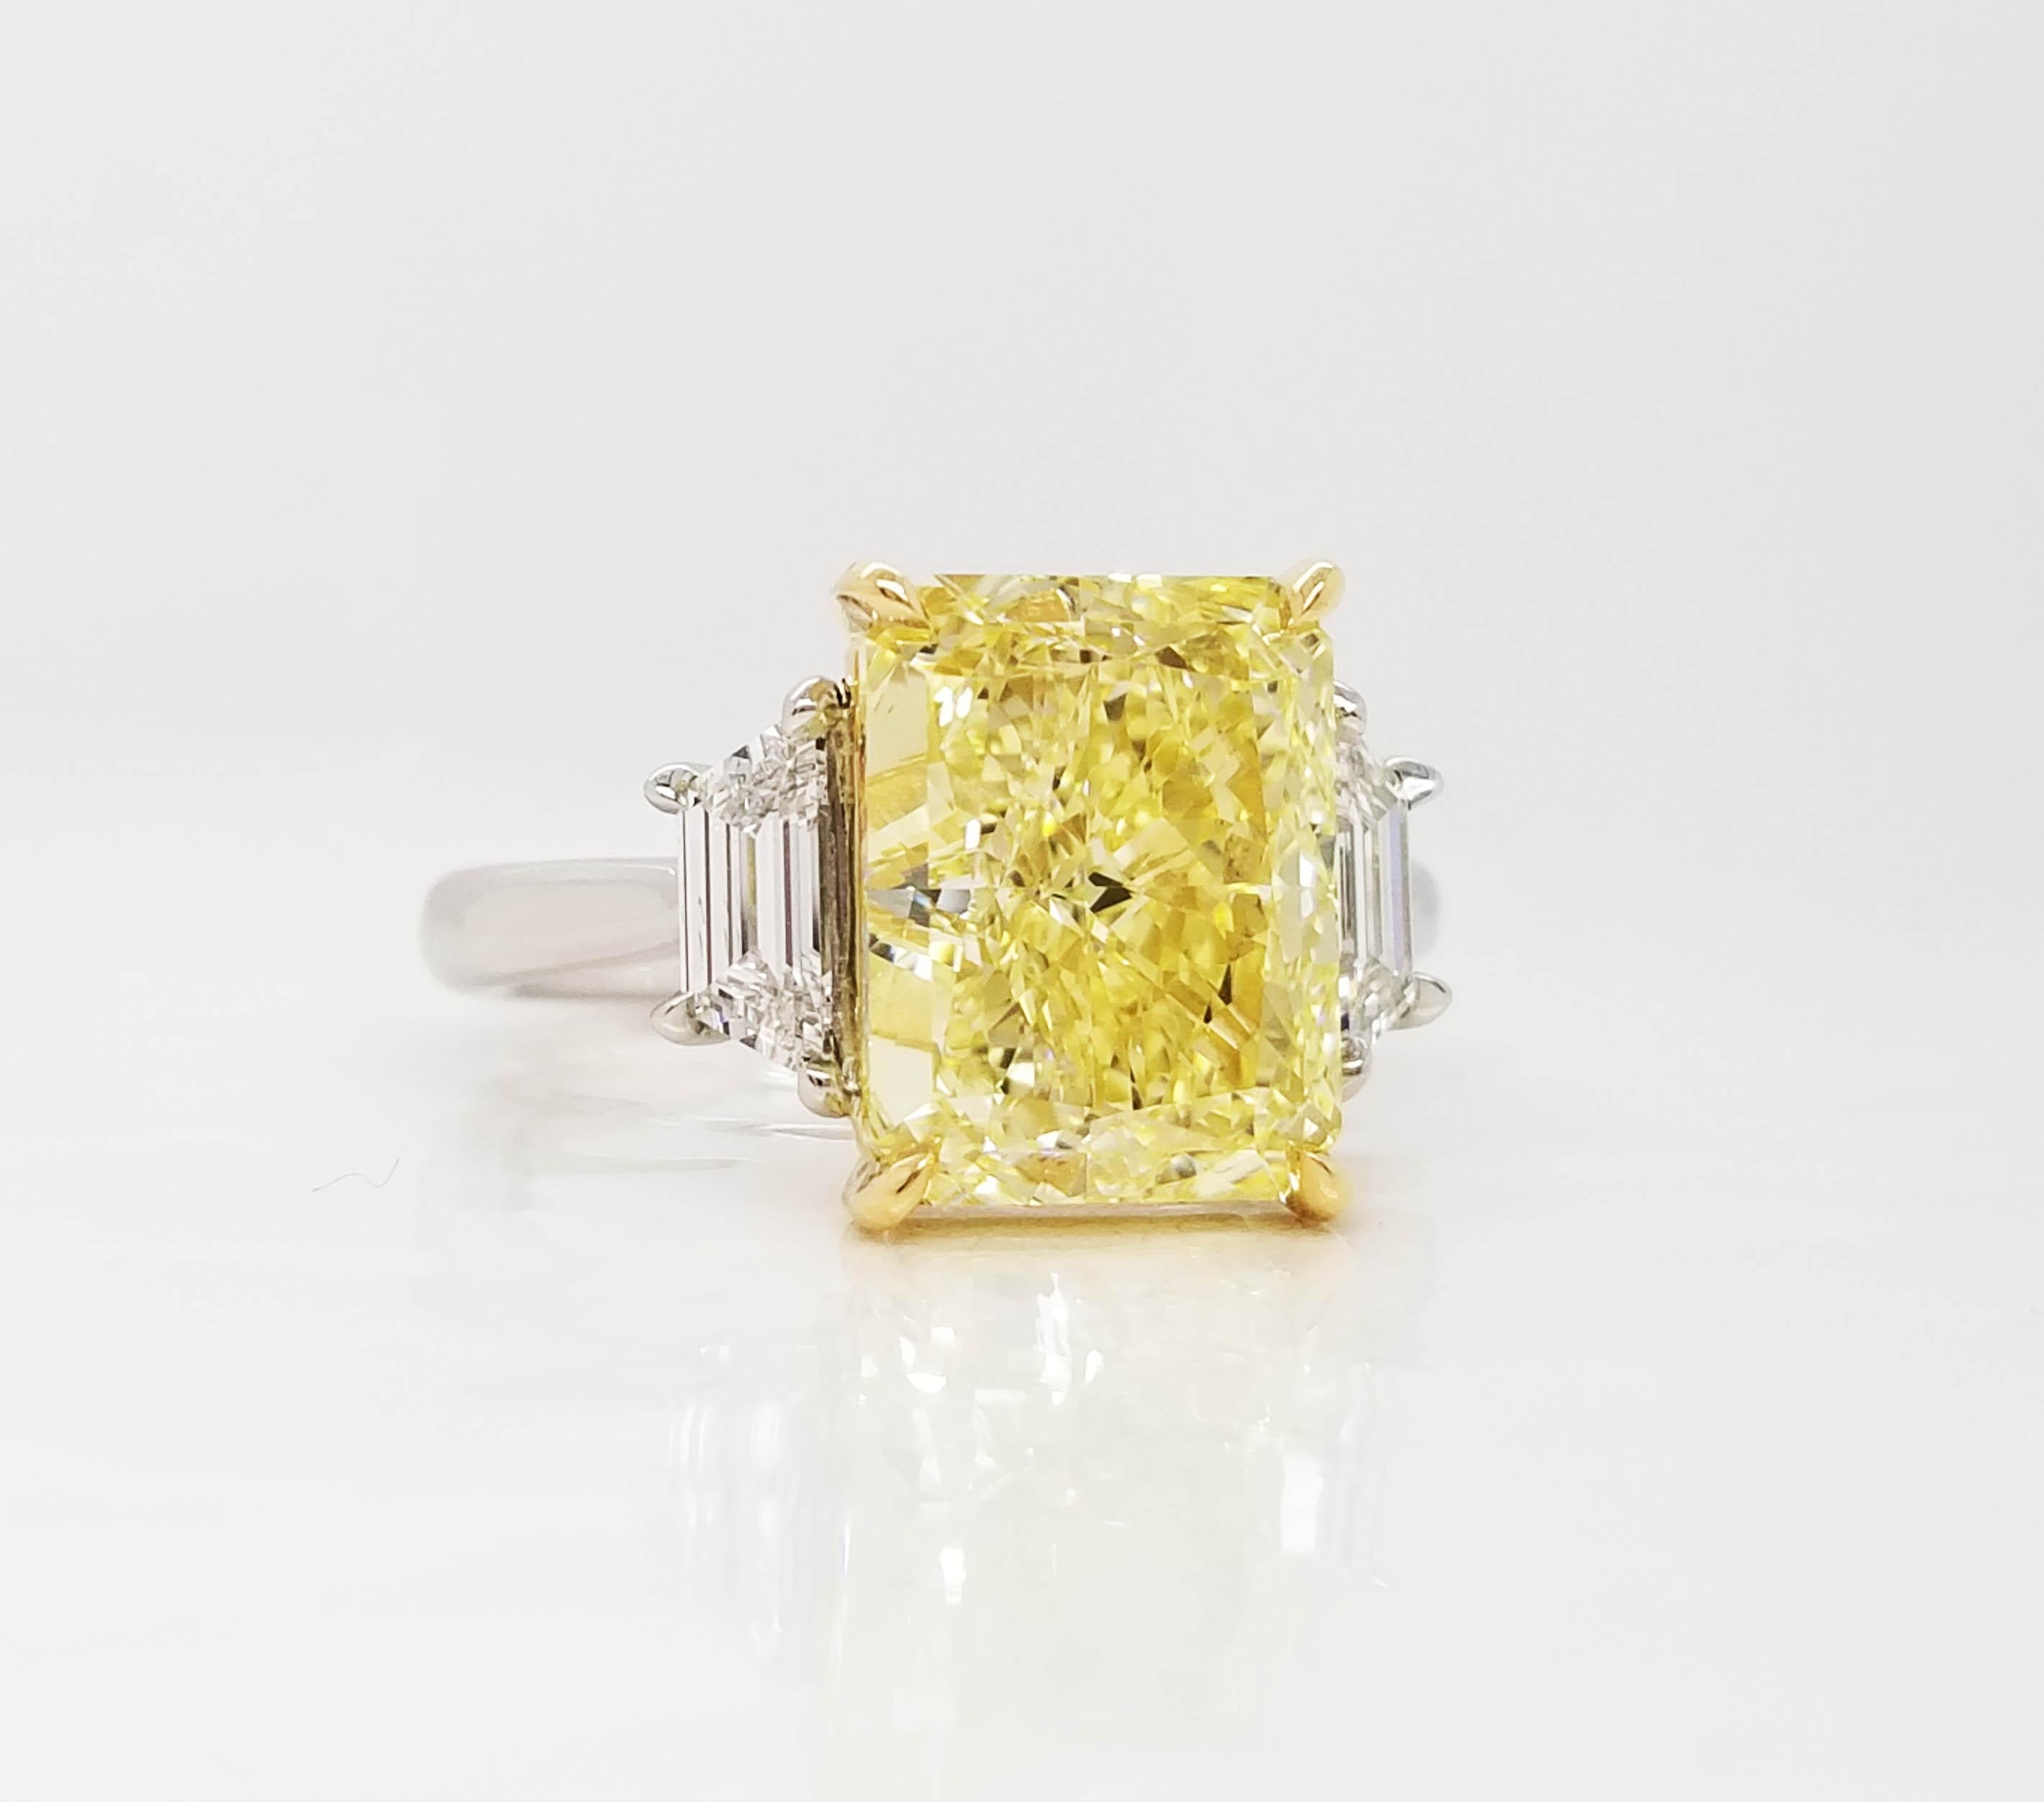 Radiant Cut Scarselli 5 Carat Fancy Yellow Diamond Ring in Platinum & 18k